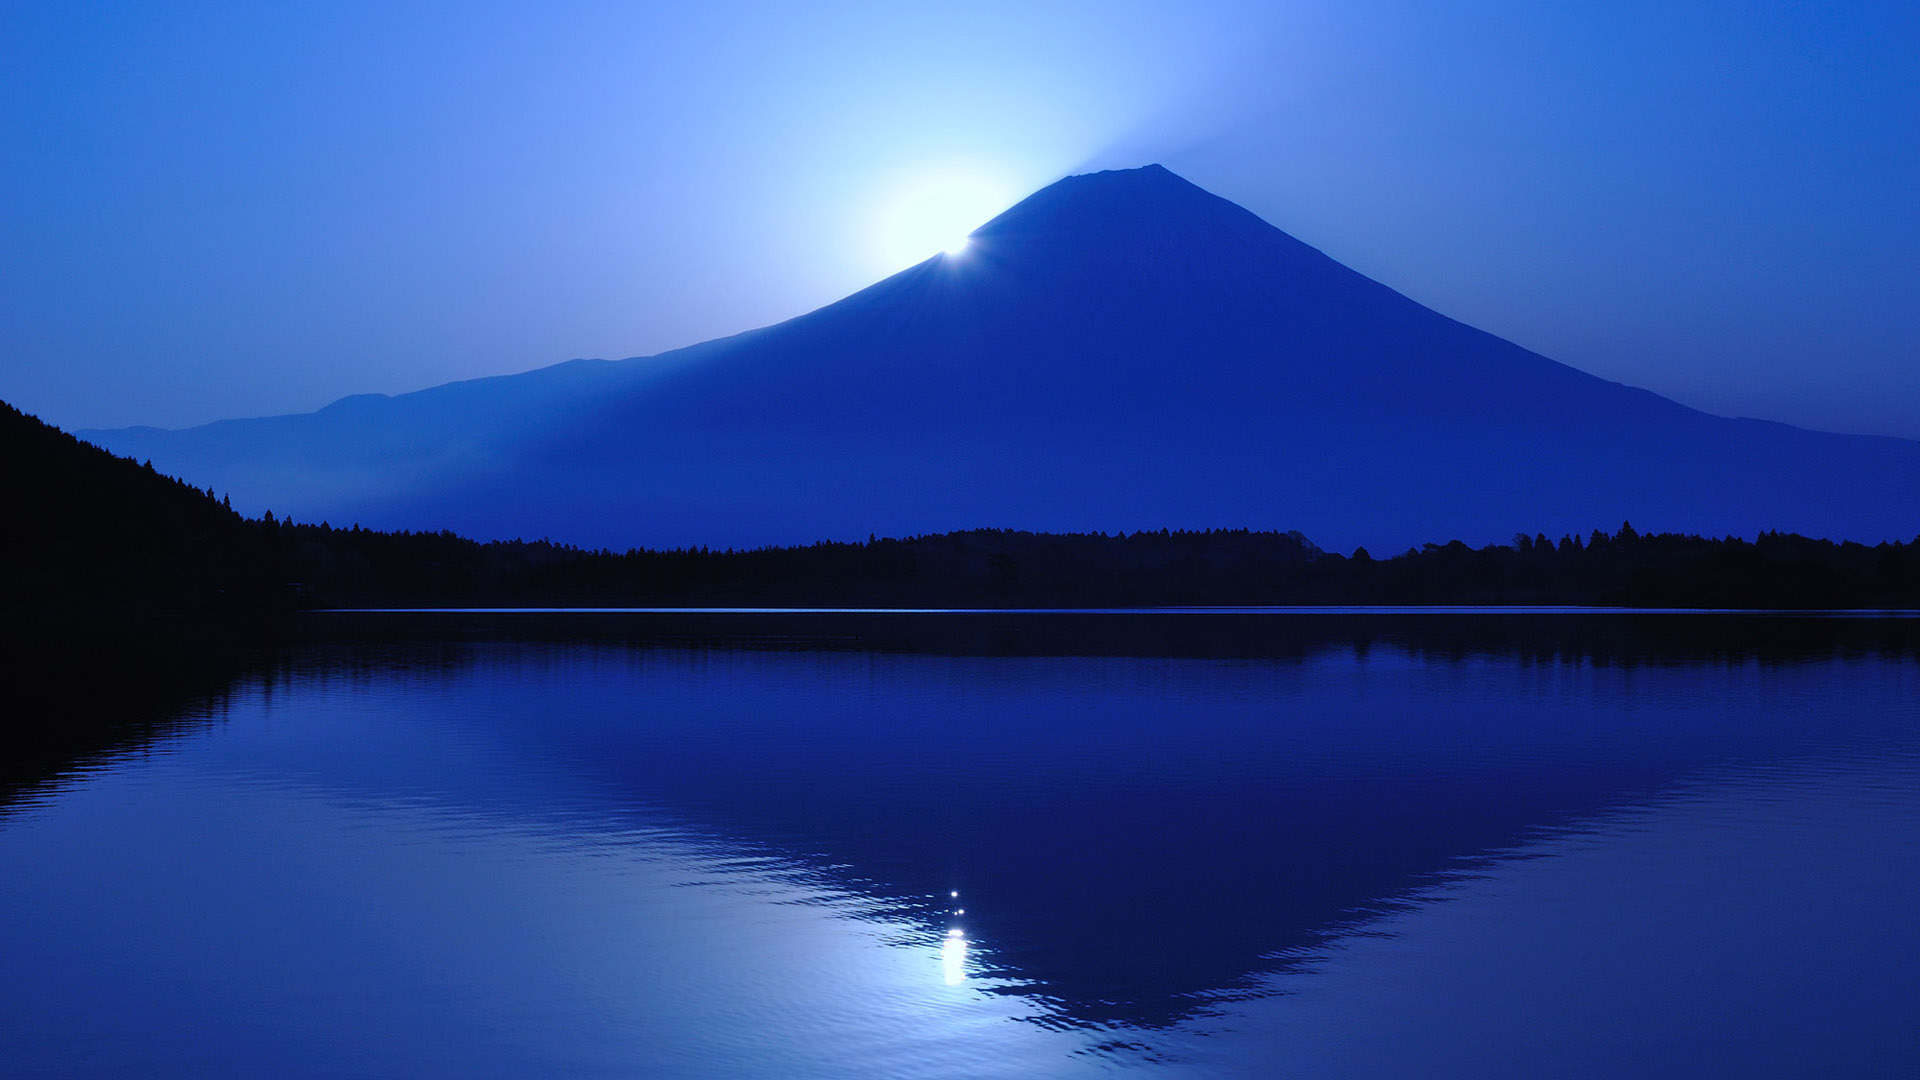 Japan Fuji Mountain Wallpaper, Mount Fuji Landscape Picture